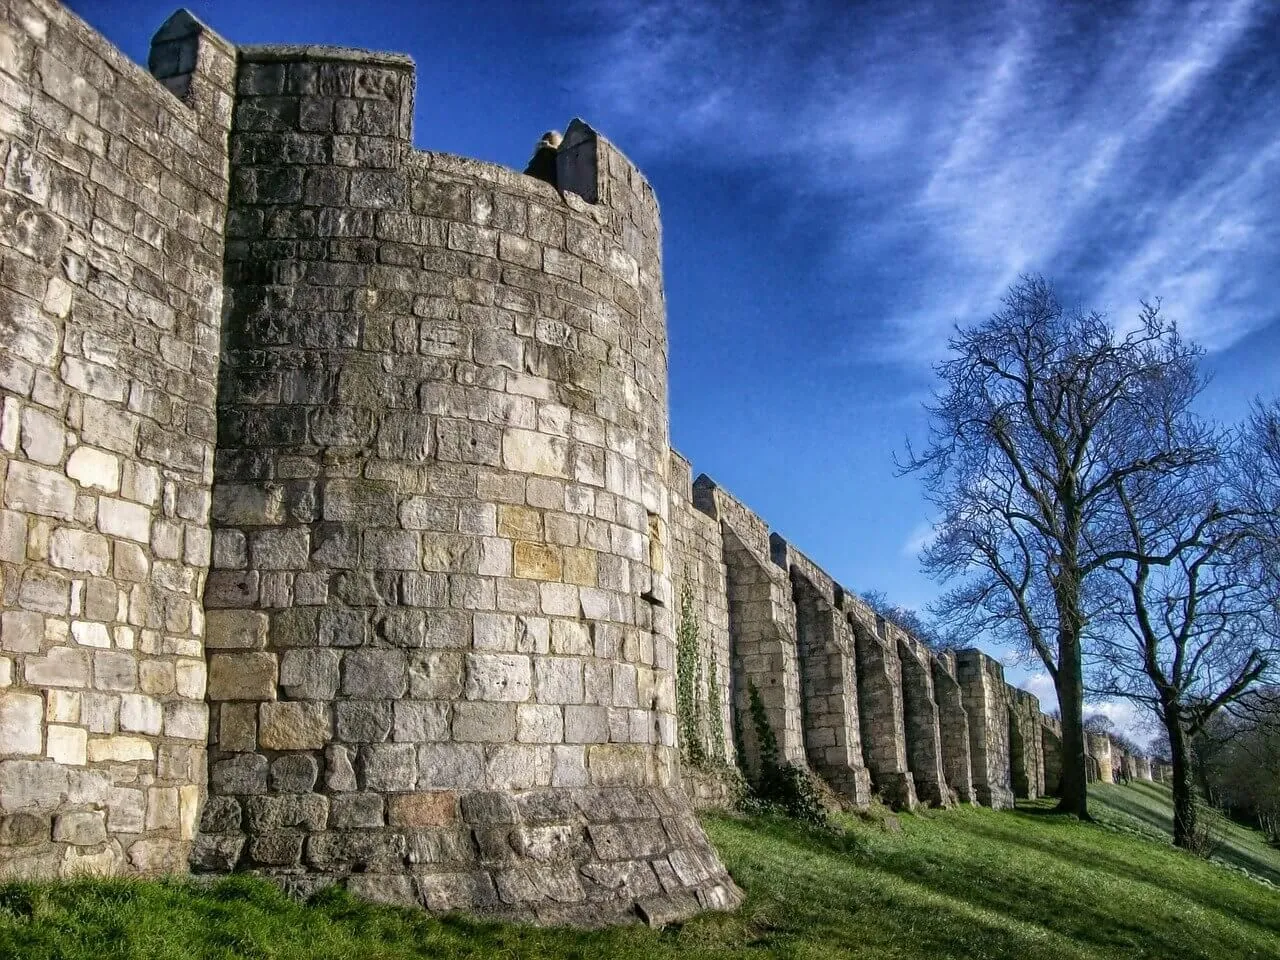 North Yorkshire city walls